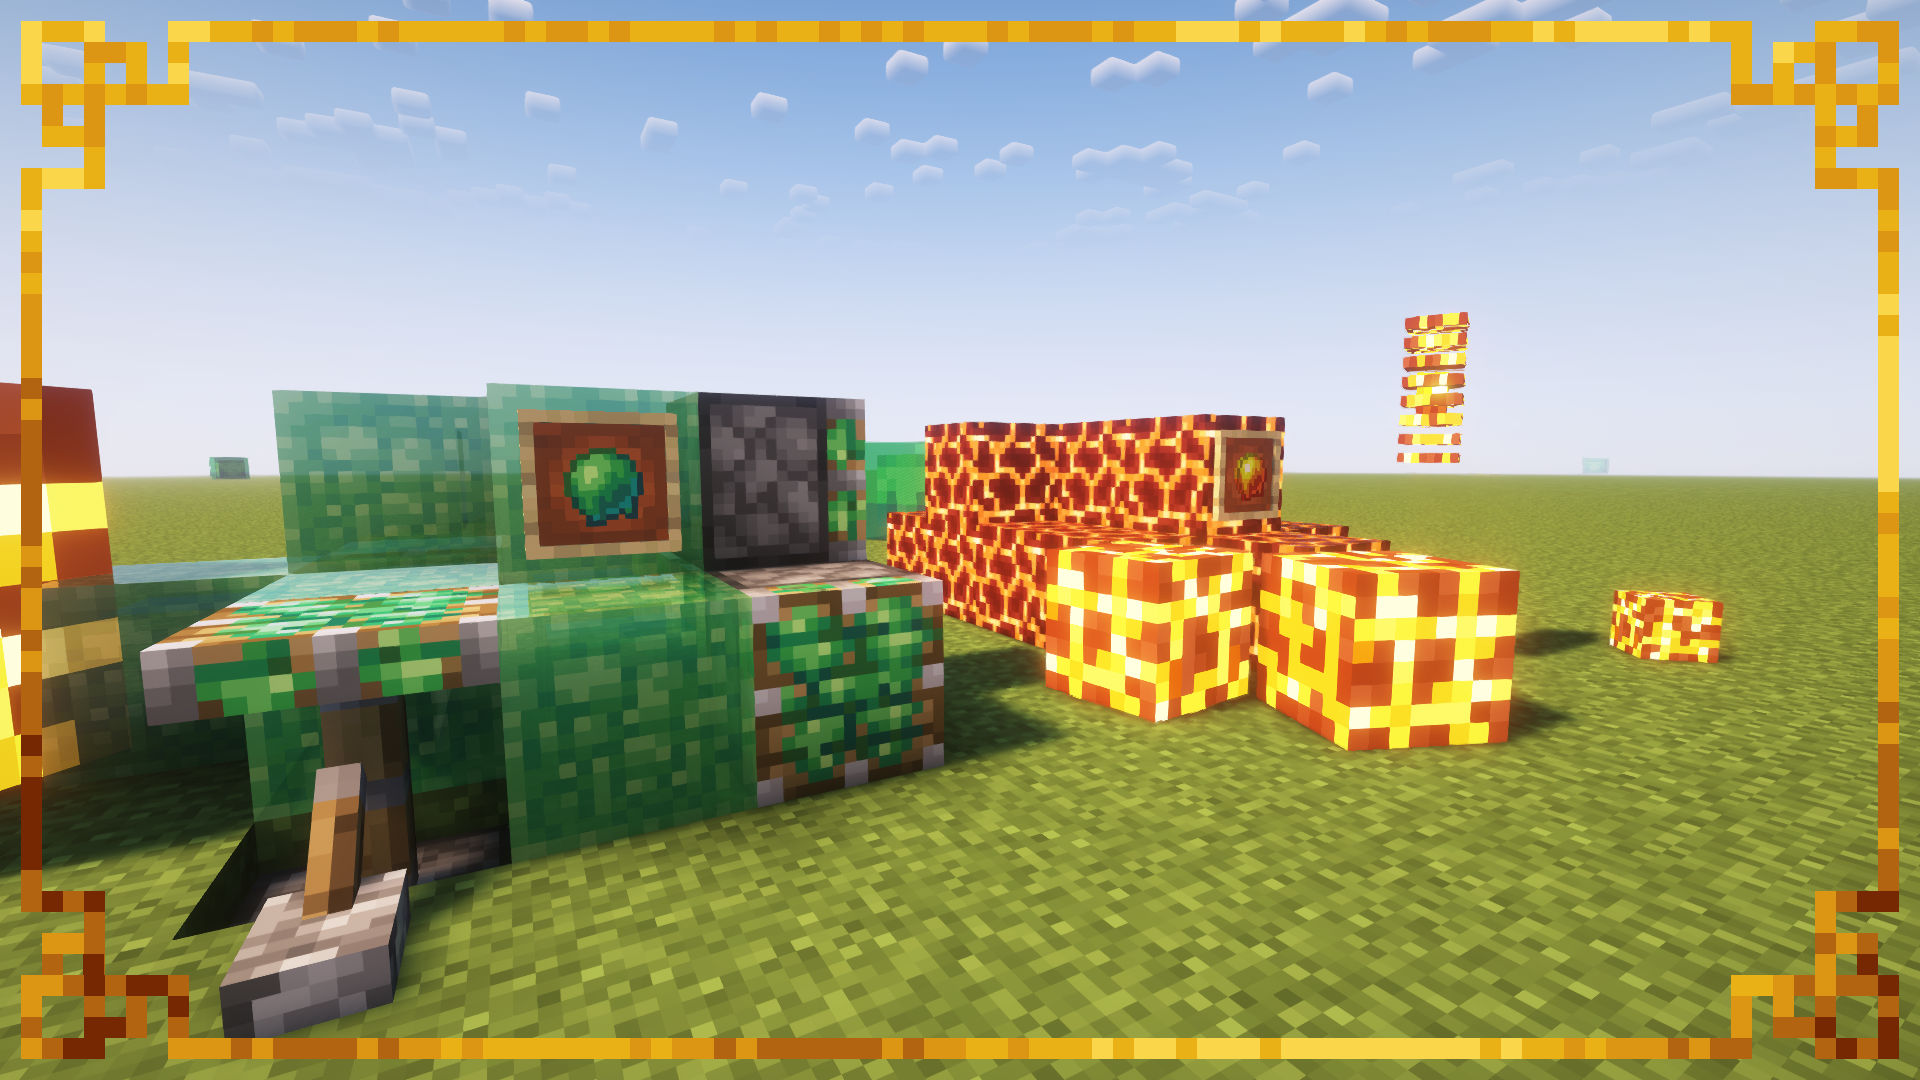 Showcase of the updated blocks/items